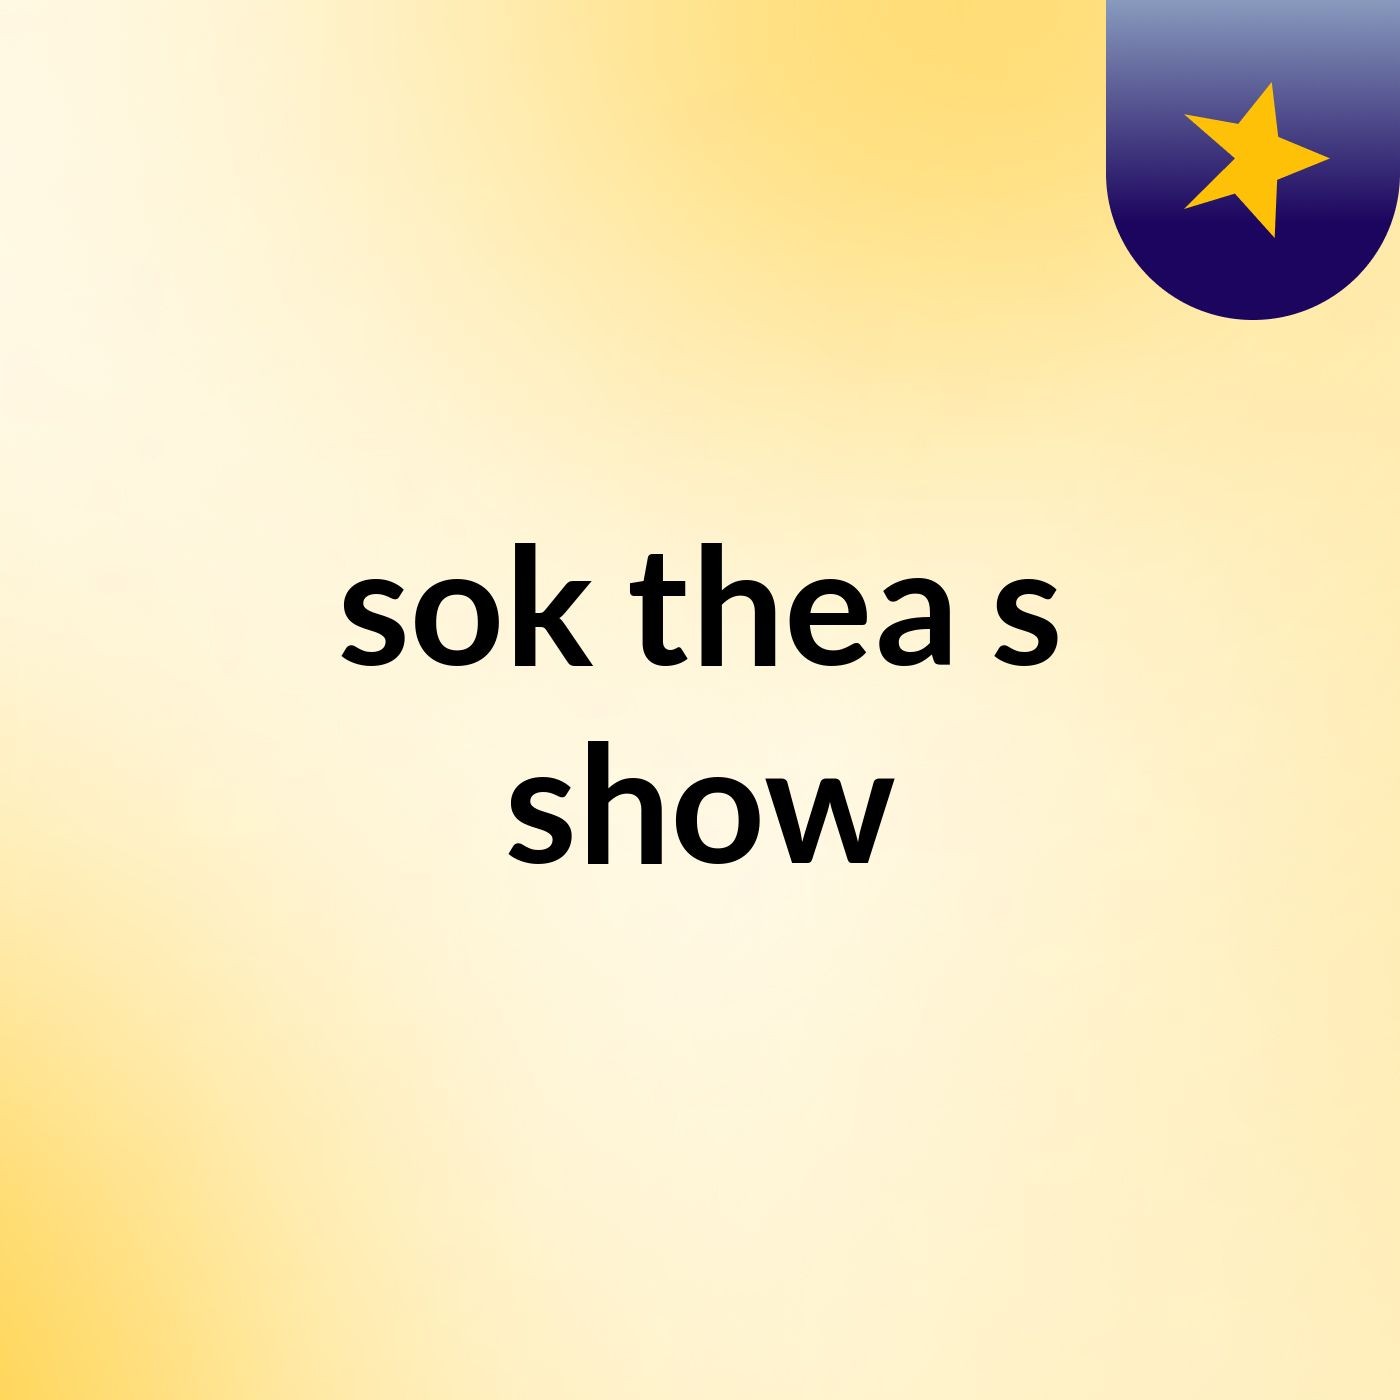 sok thea's show